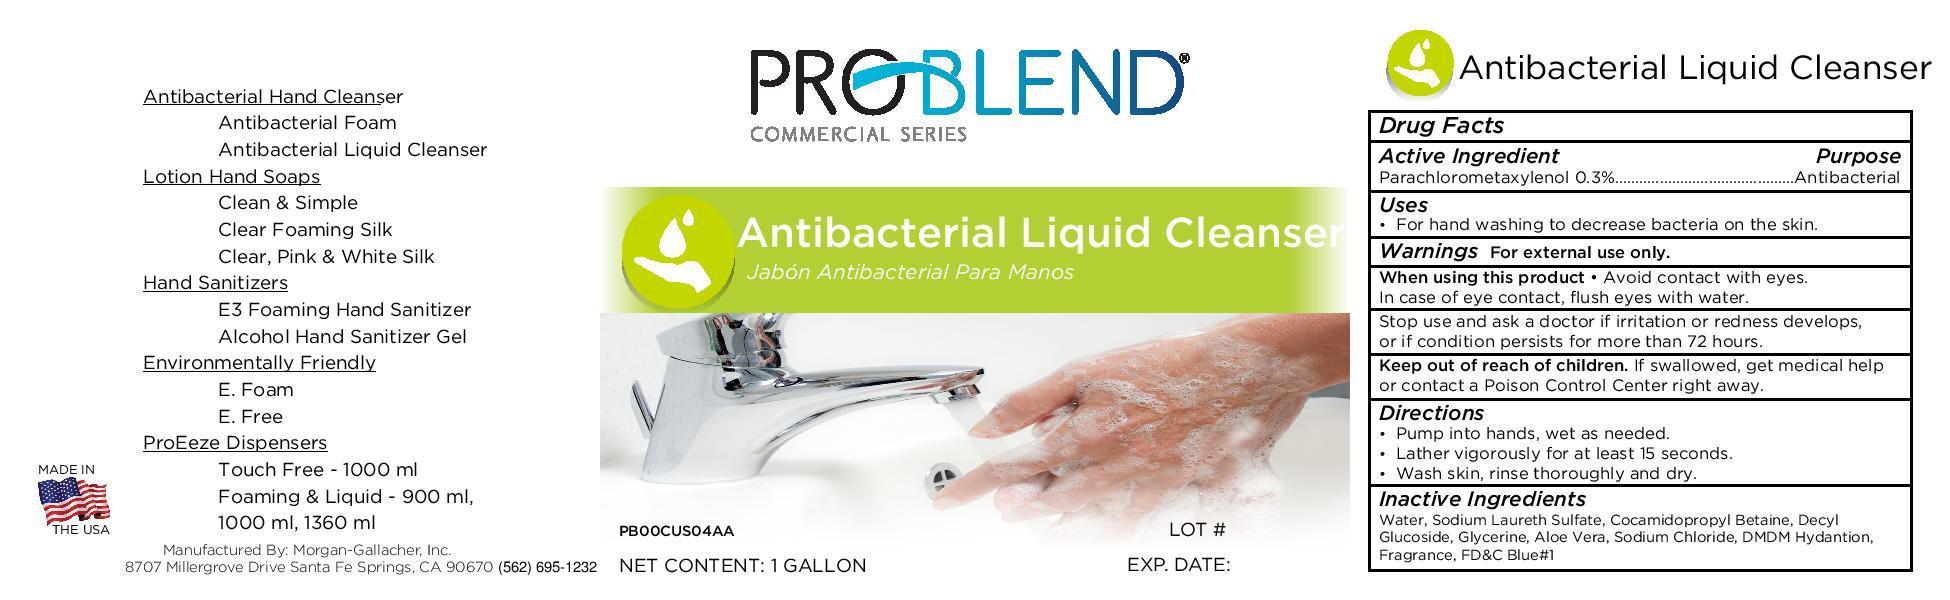 Problend Antibacterial Liquid Cleanser